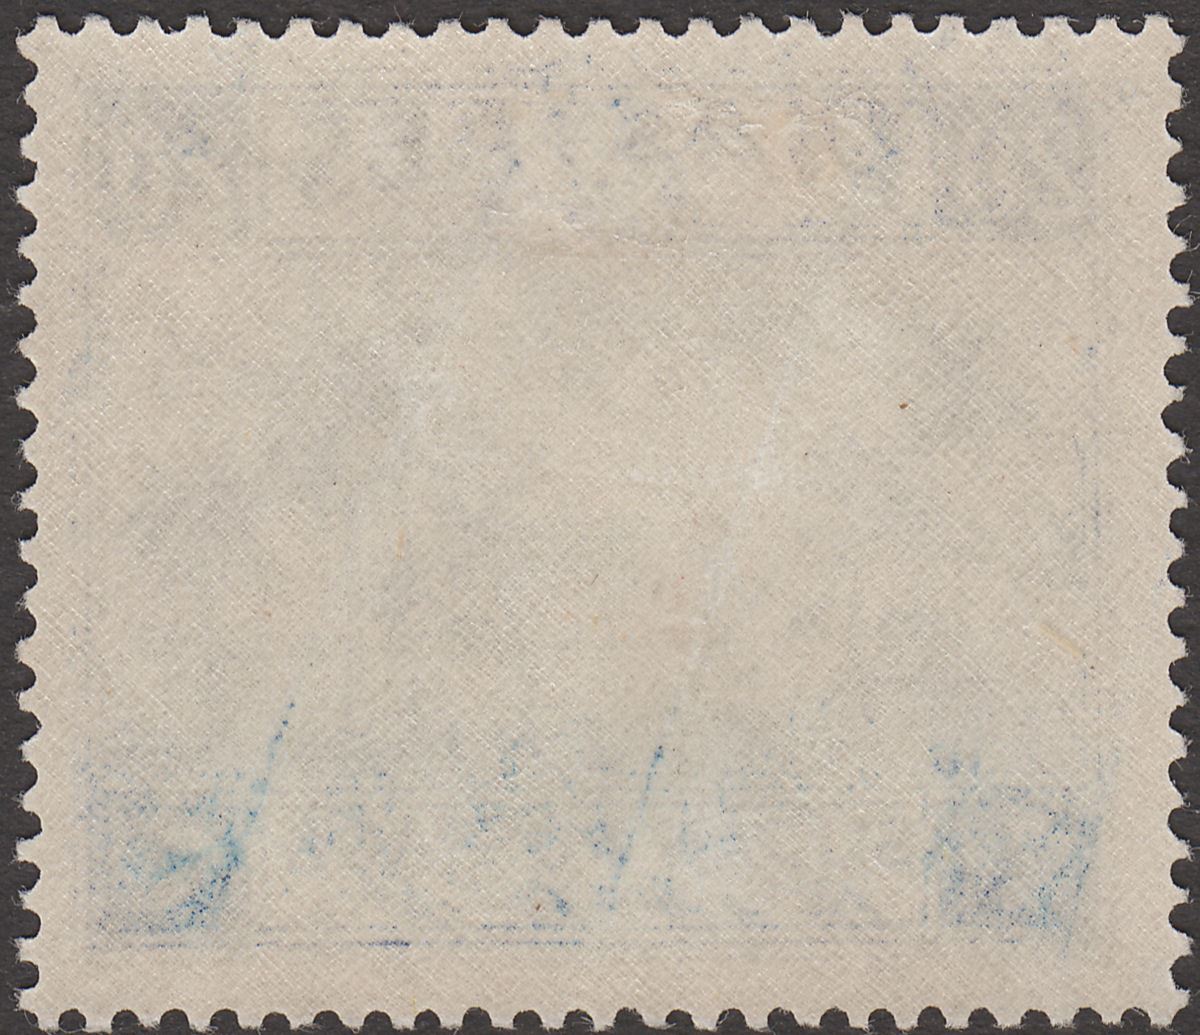 Sudan 1941 Tuti Island 20p Pale Blue and Blue Mint SG95 cat £100 creases